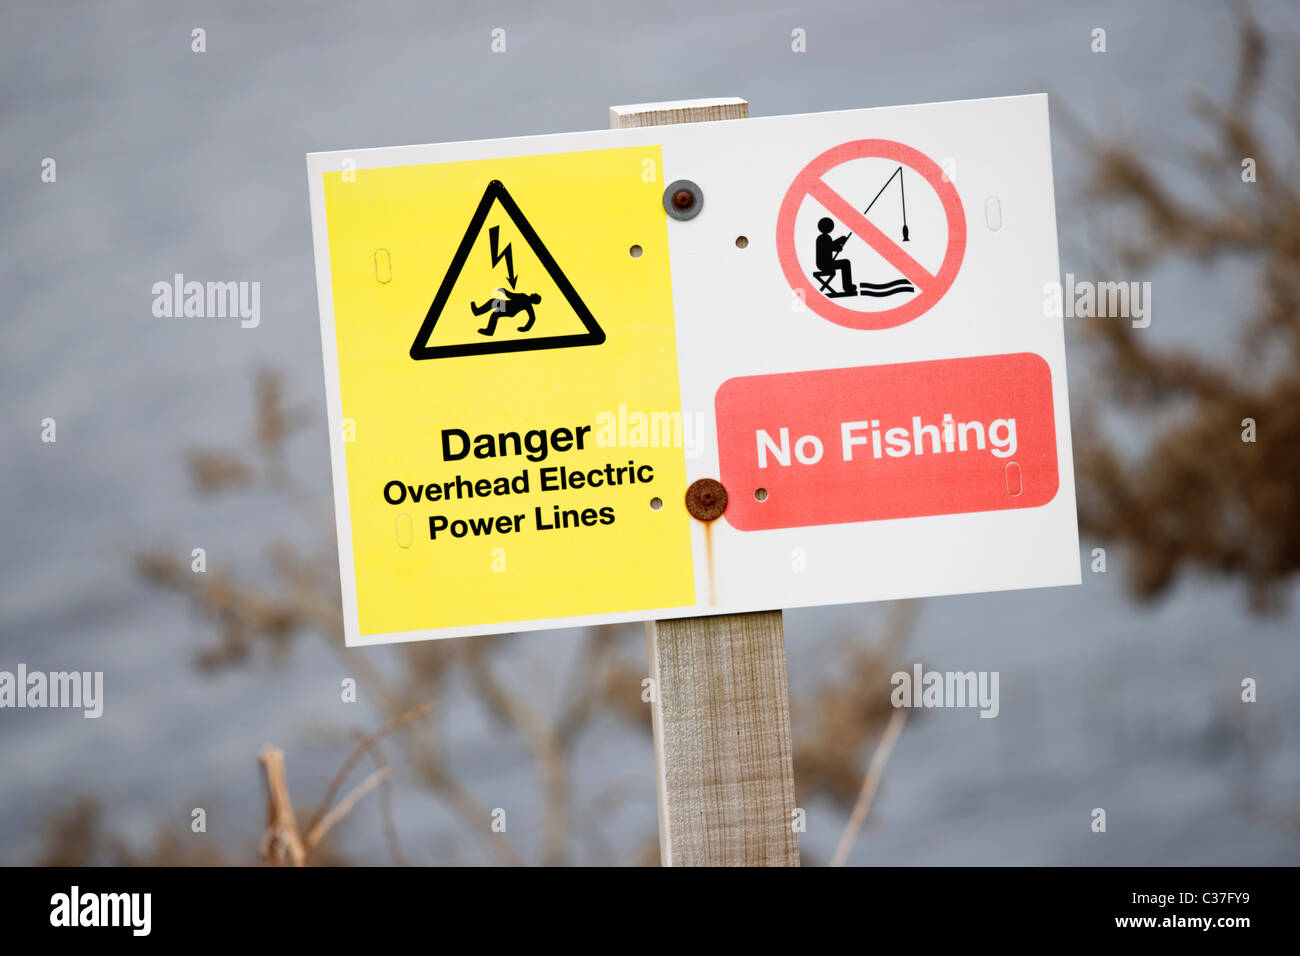 https://c8.alamy.com/comp/C37FY9/danger-sign-warning-of-overhead-electric-power-lines-no-fishing-C37FY9.jpg